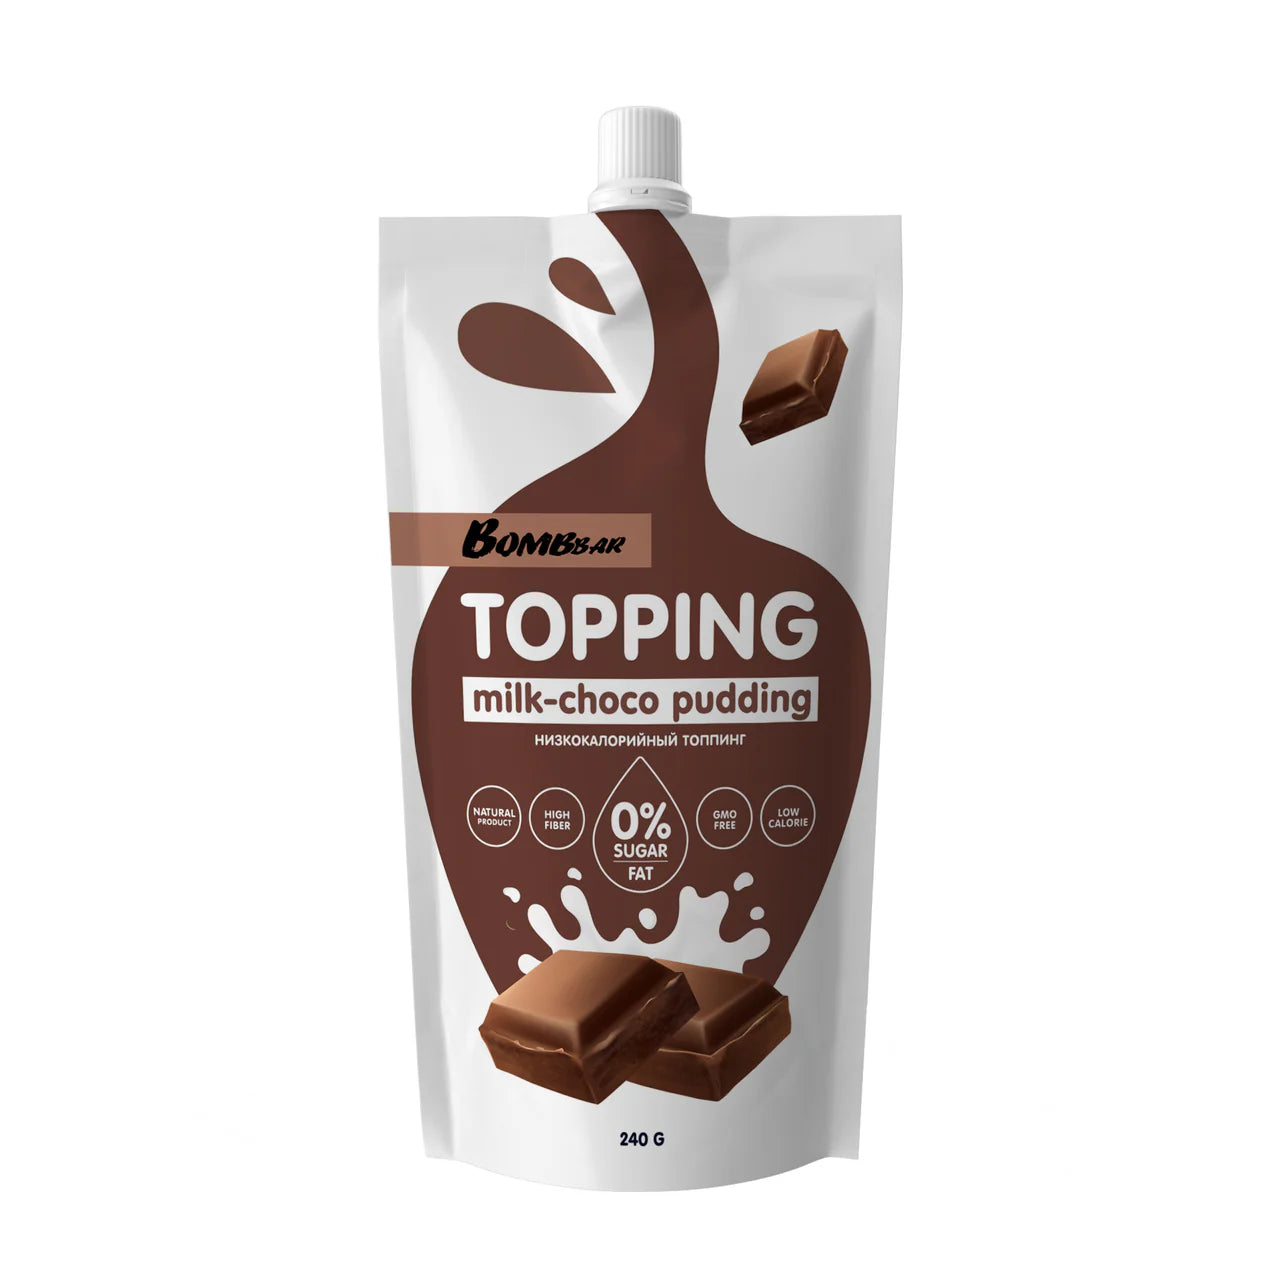 Bombbar Sweet Toppings 240g - Milk Chocolate Pudding Sauce